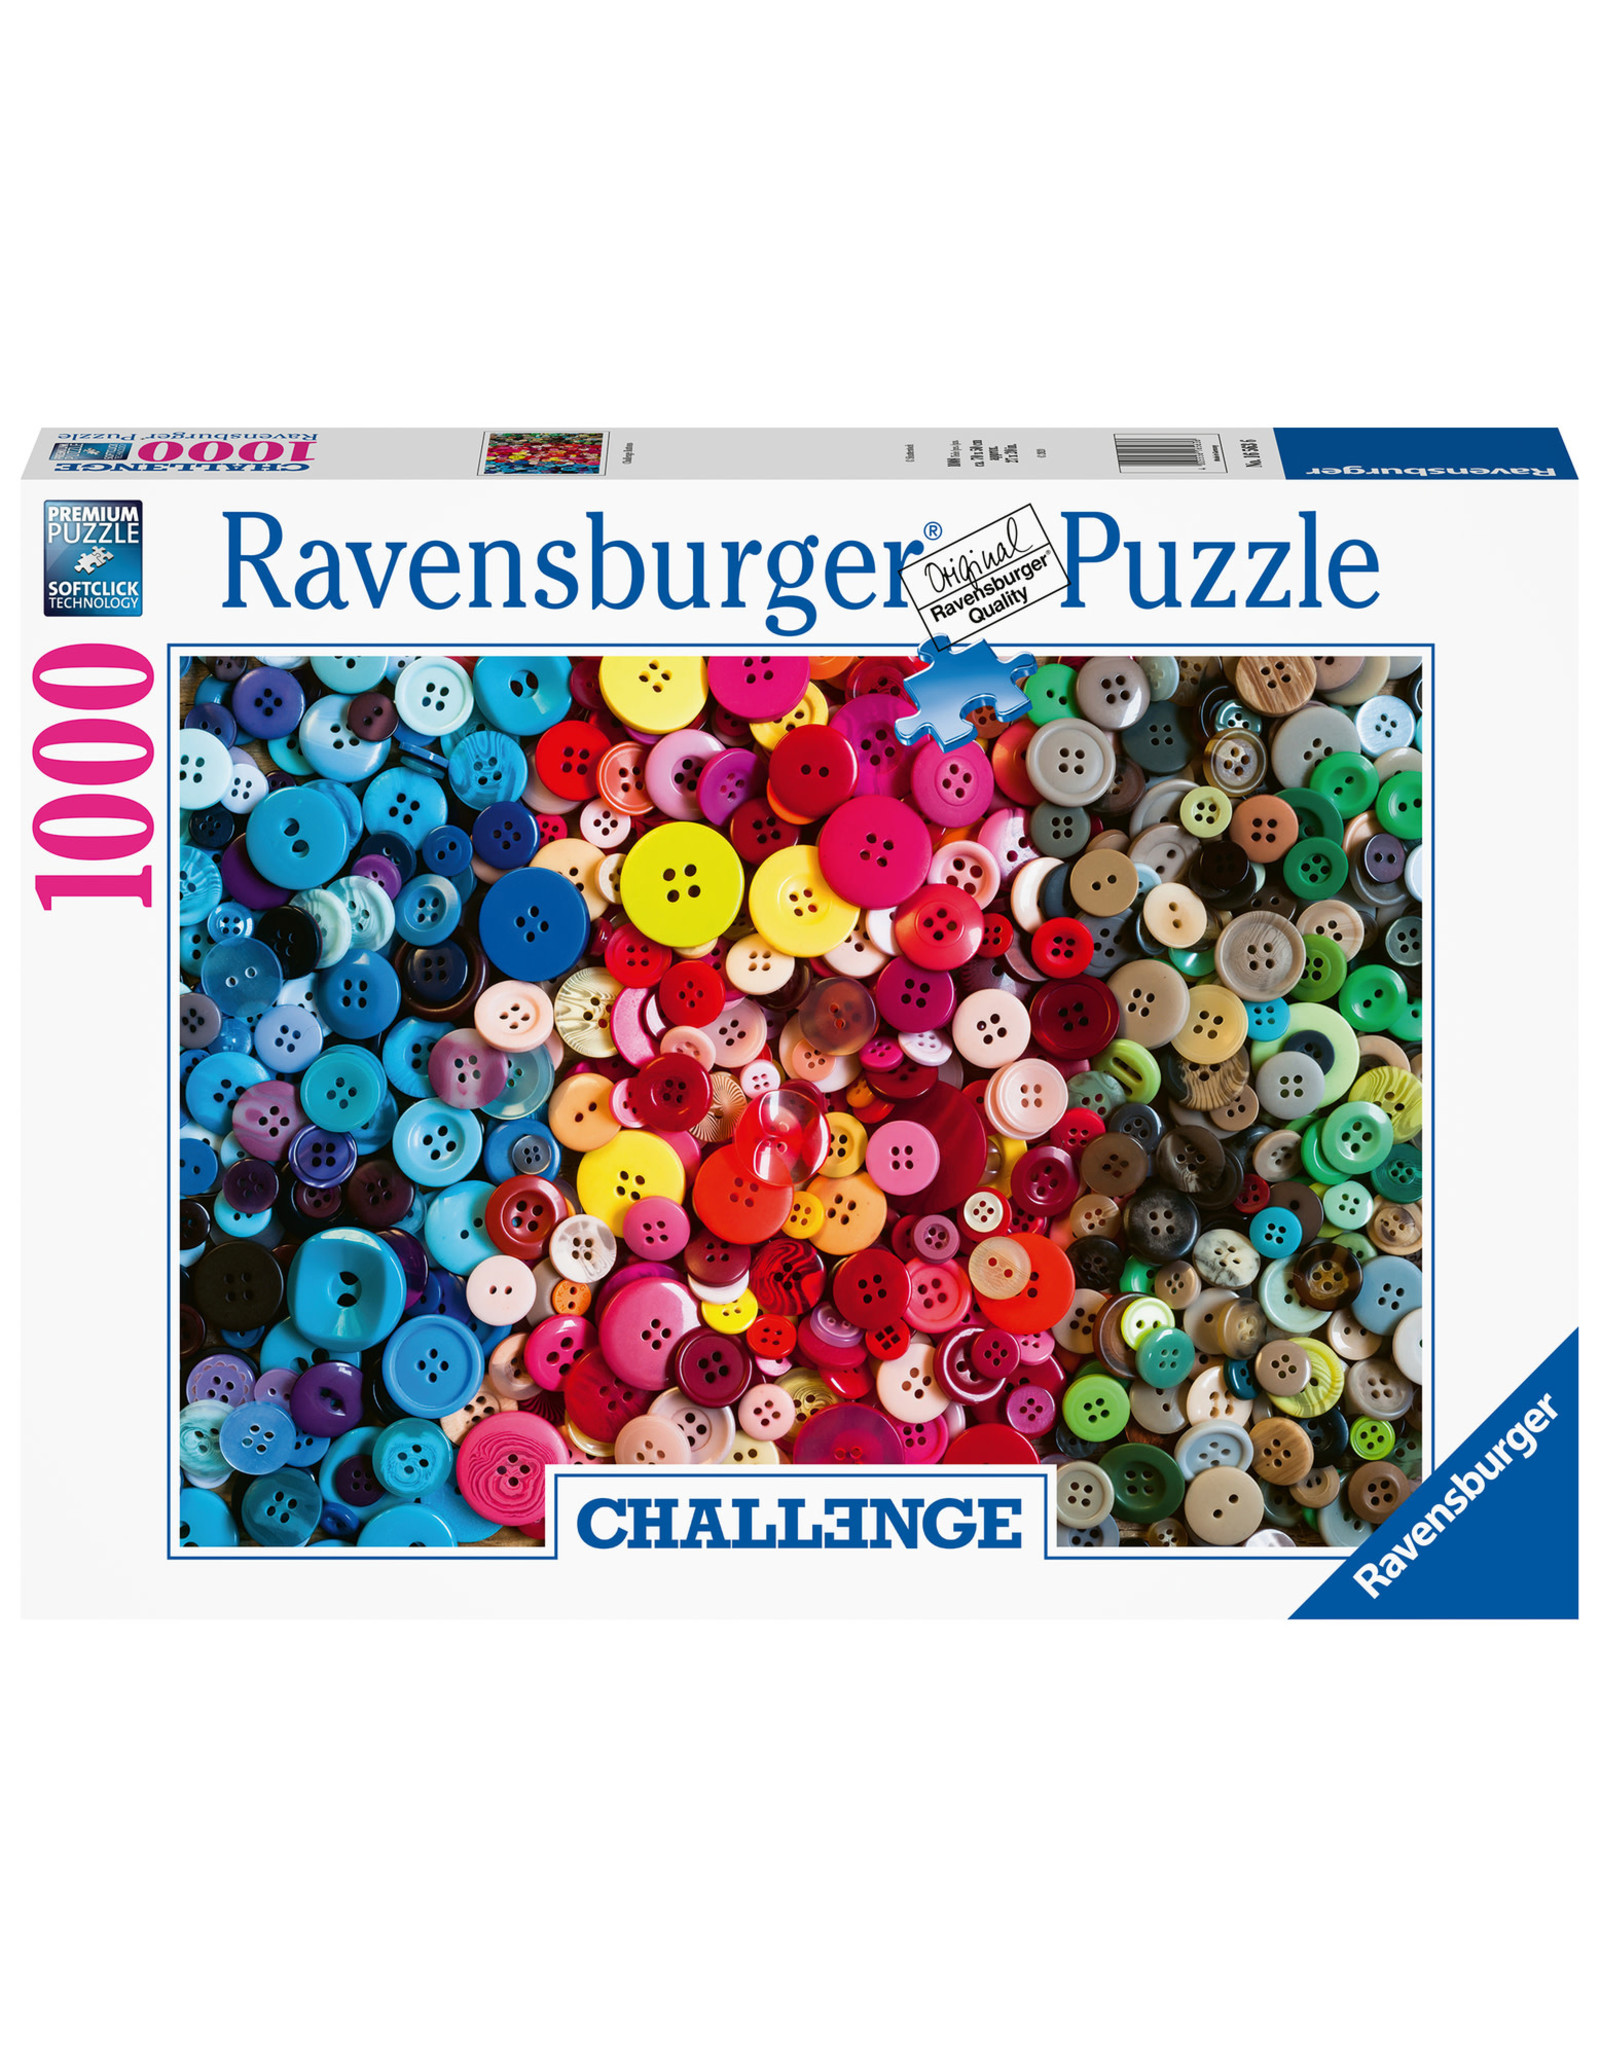 Ravensburger Ravensburger Puzzel 165636 Challenge Knopen  1000 stukjes - Challenge Buttons